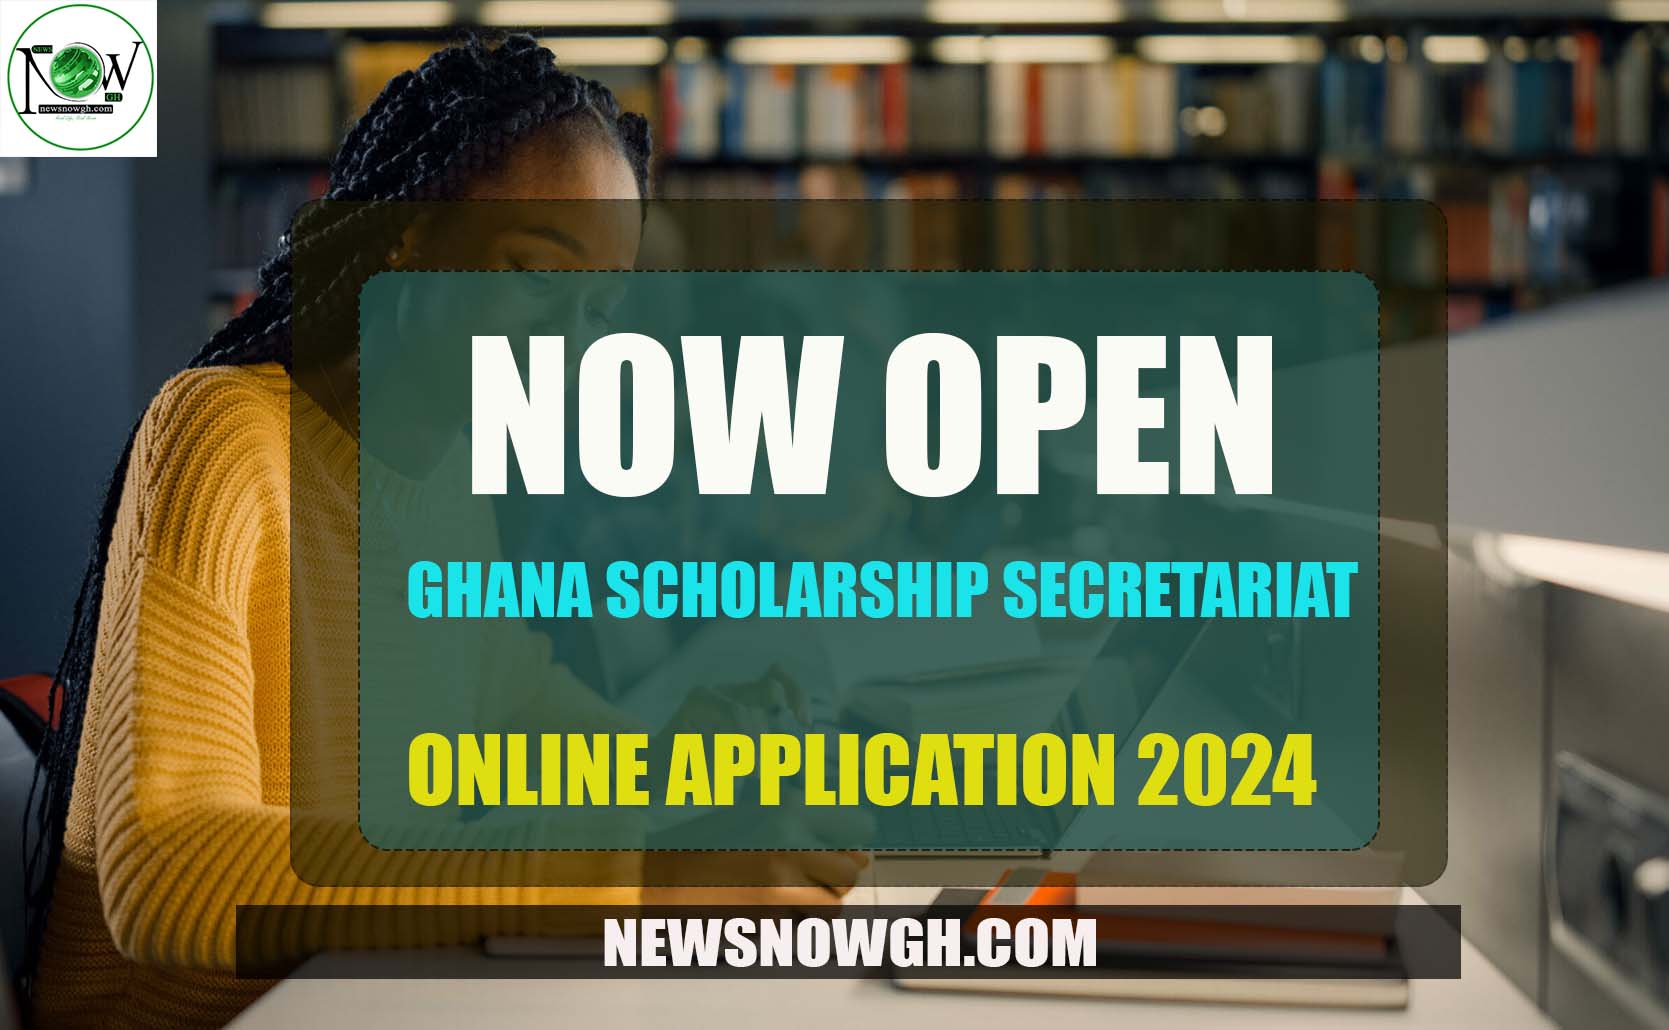 NOW OPEN GHANA SCHOLARSHIP SECRETARIAT ONLINE APPLICATION 2024